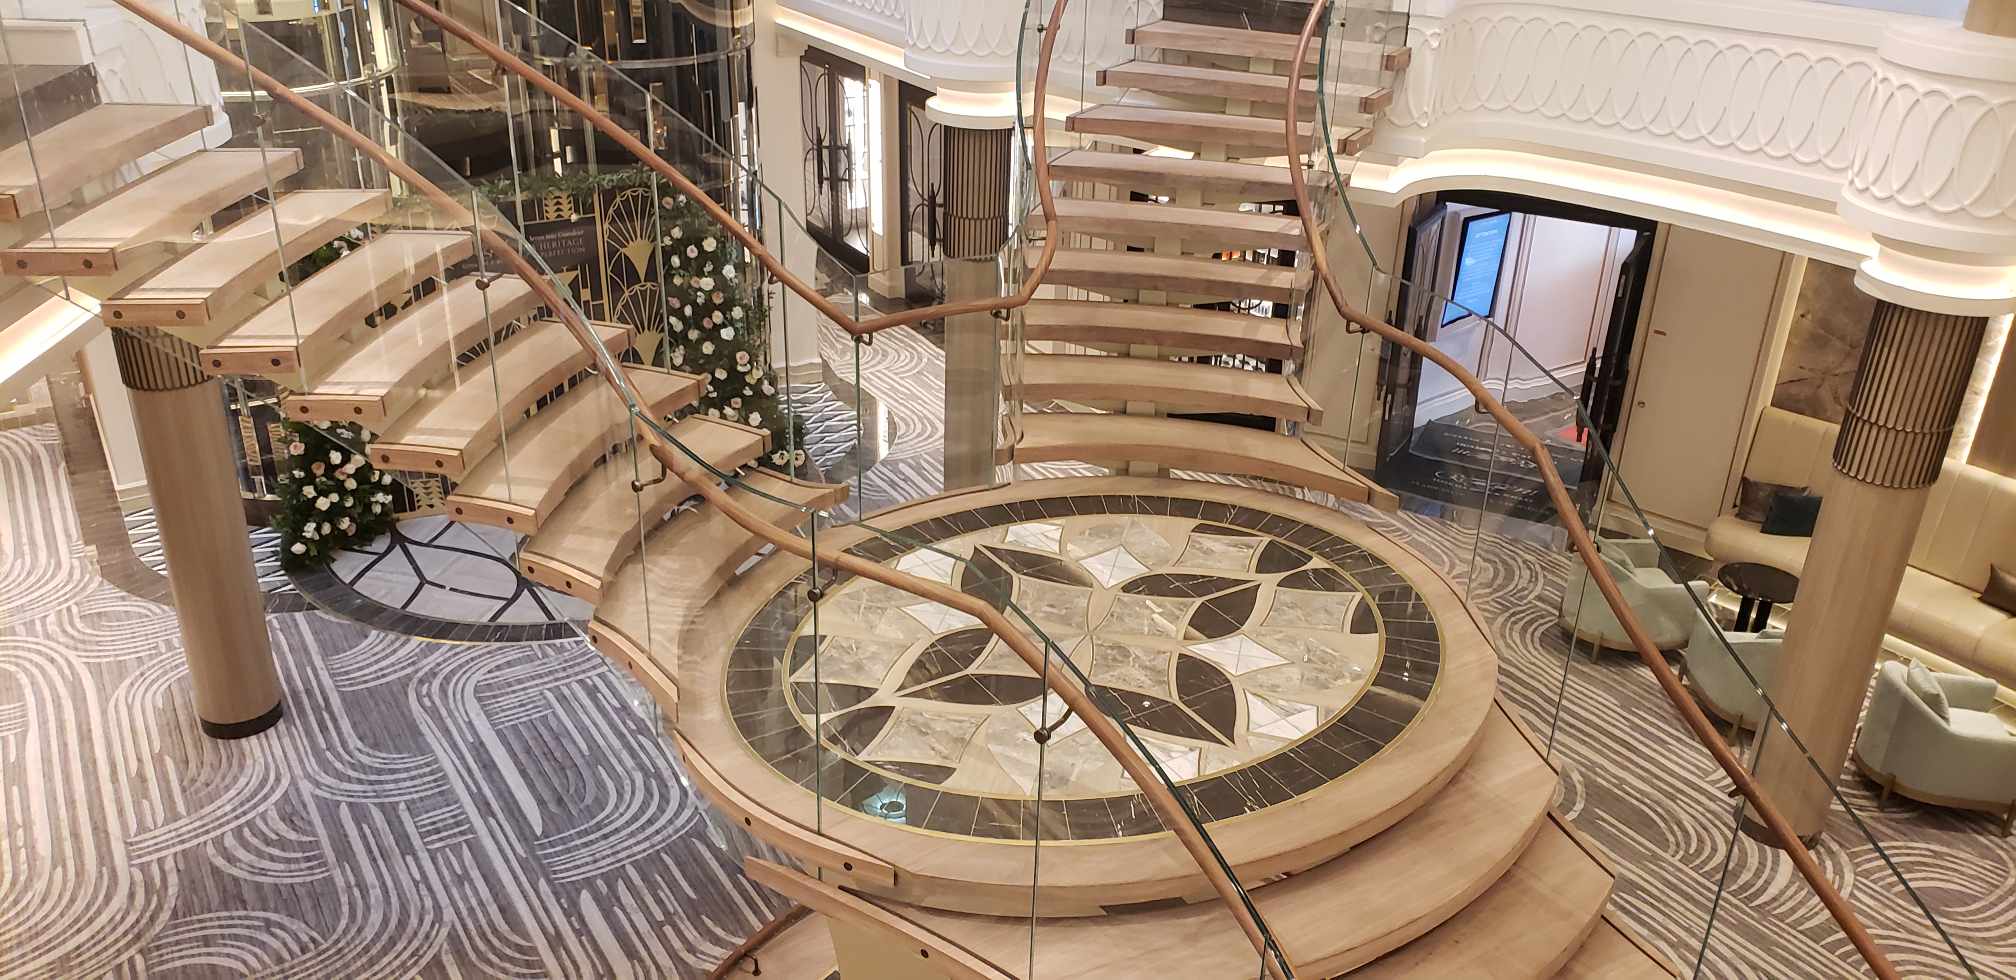 The grand atrium staircase of Seven Seas Grandeur a Regent Seven Seas Cruises new Explorer-class ship